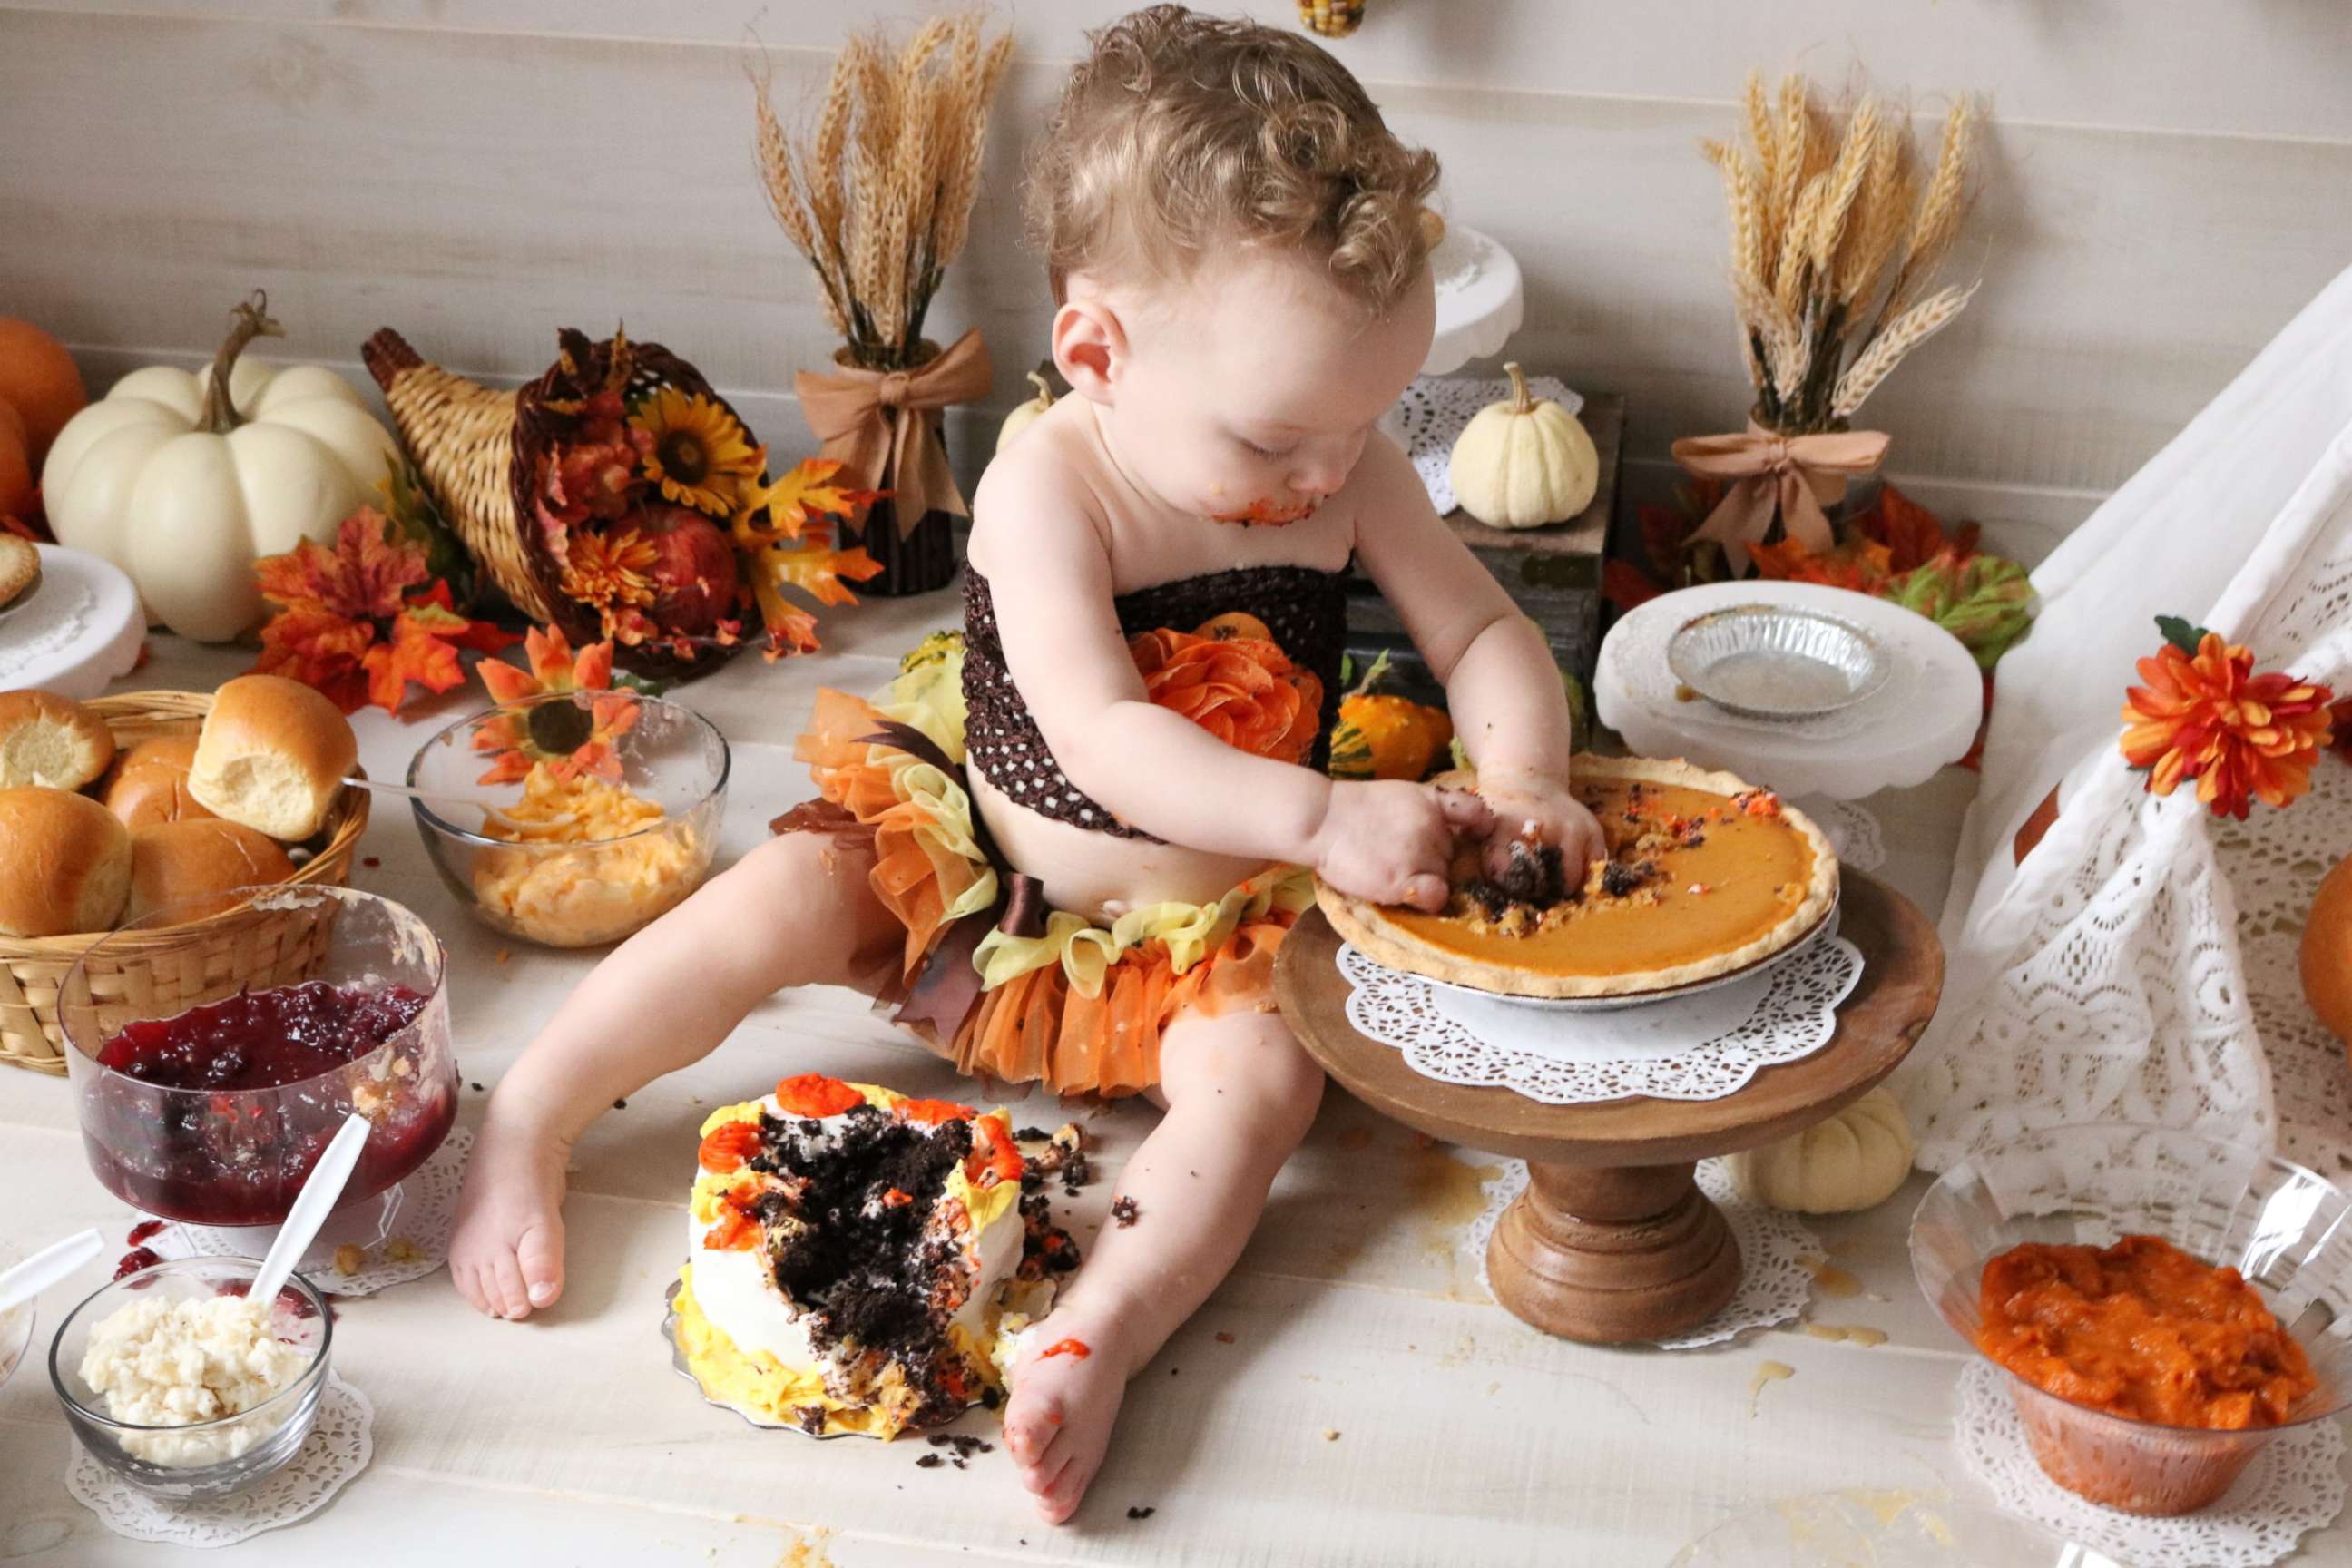 PHOTO: Vaughn Lachambre's mom, Crystal Lachambre, said his photo shoot evolved into an "outdoorsy" Thanksgiving theme.